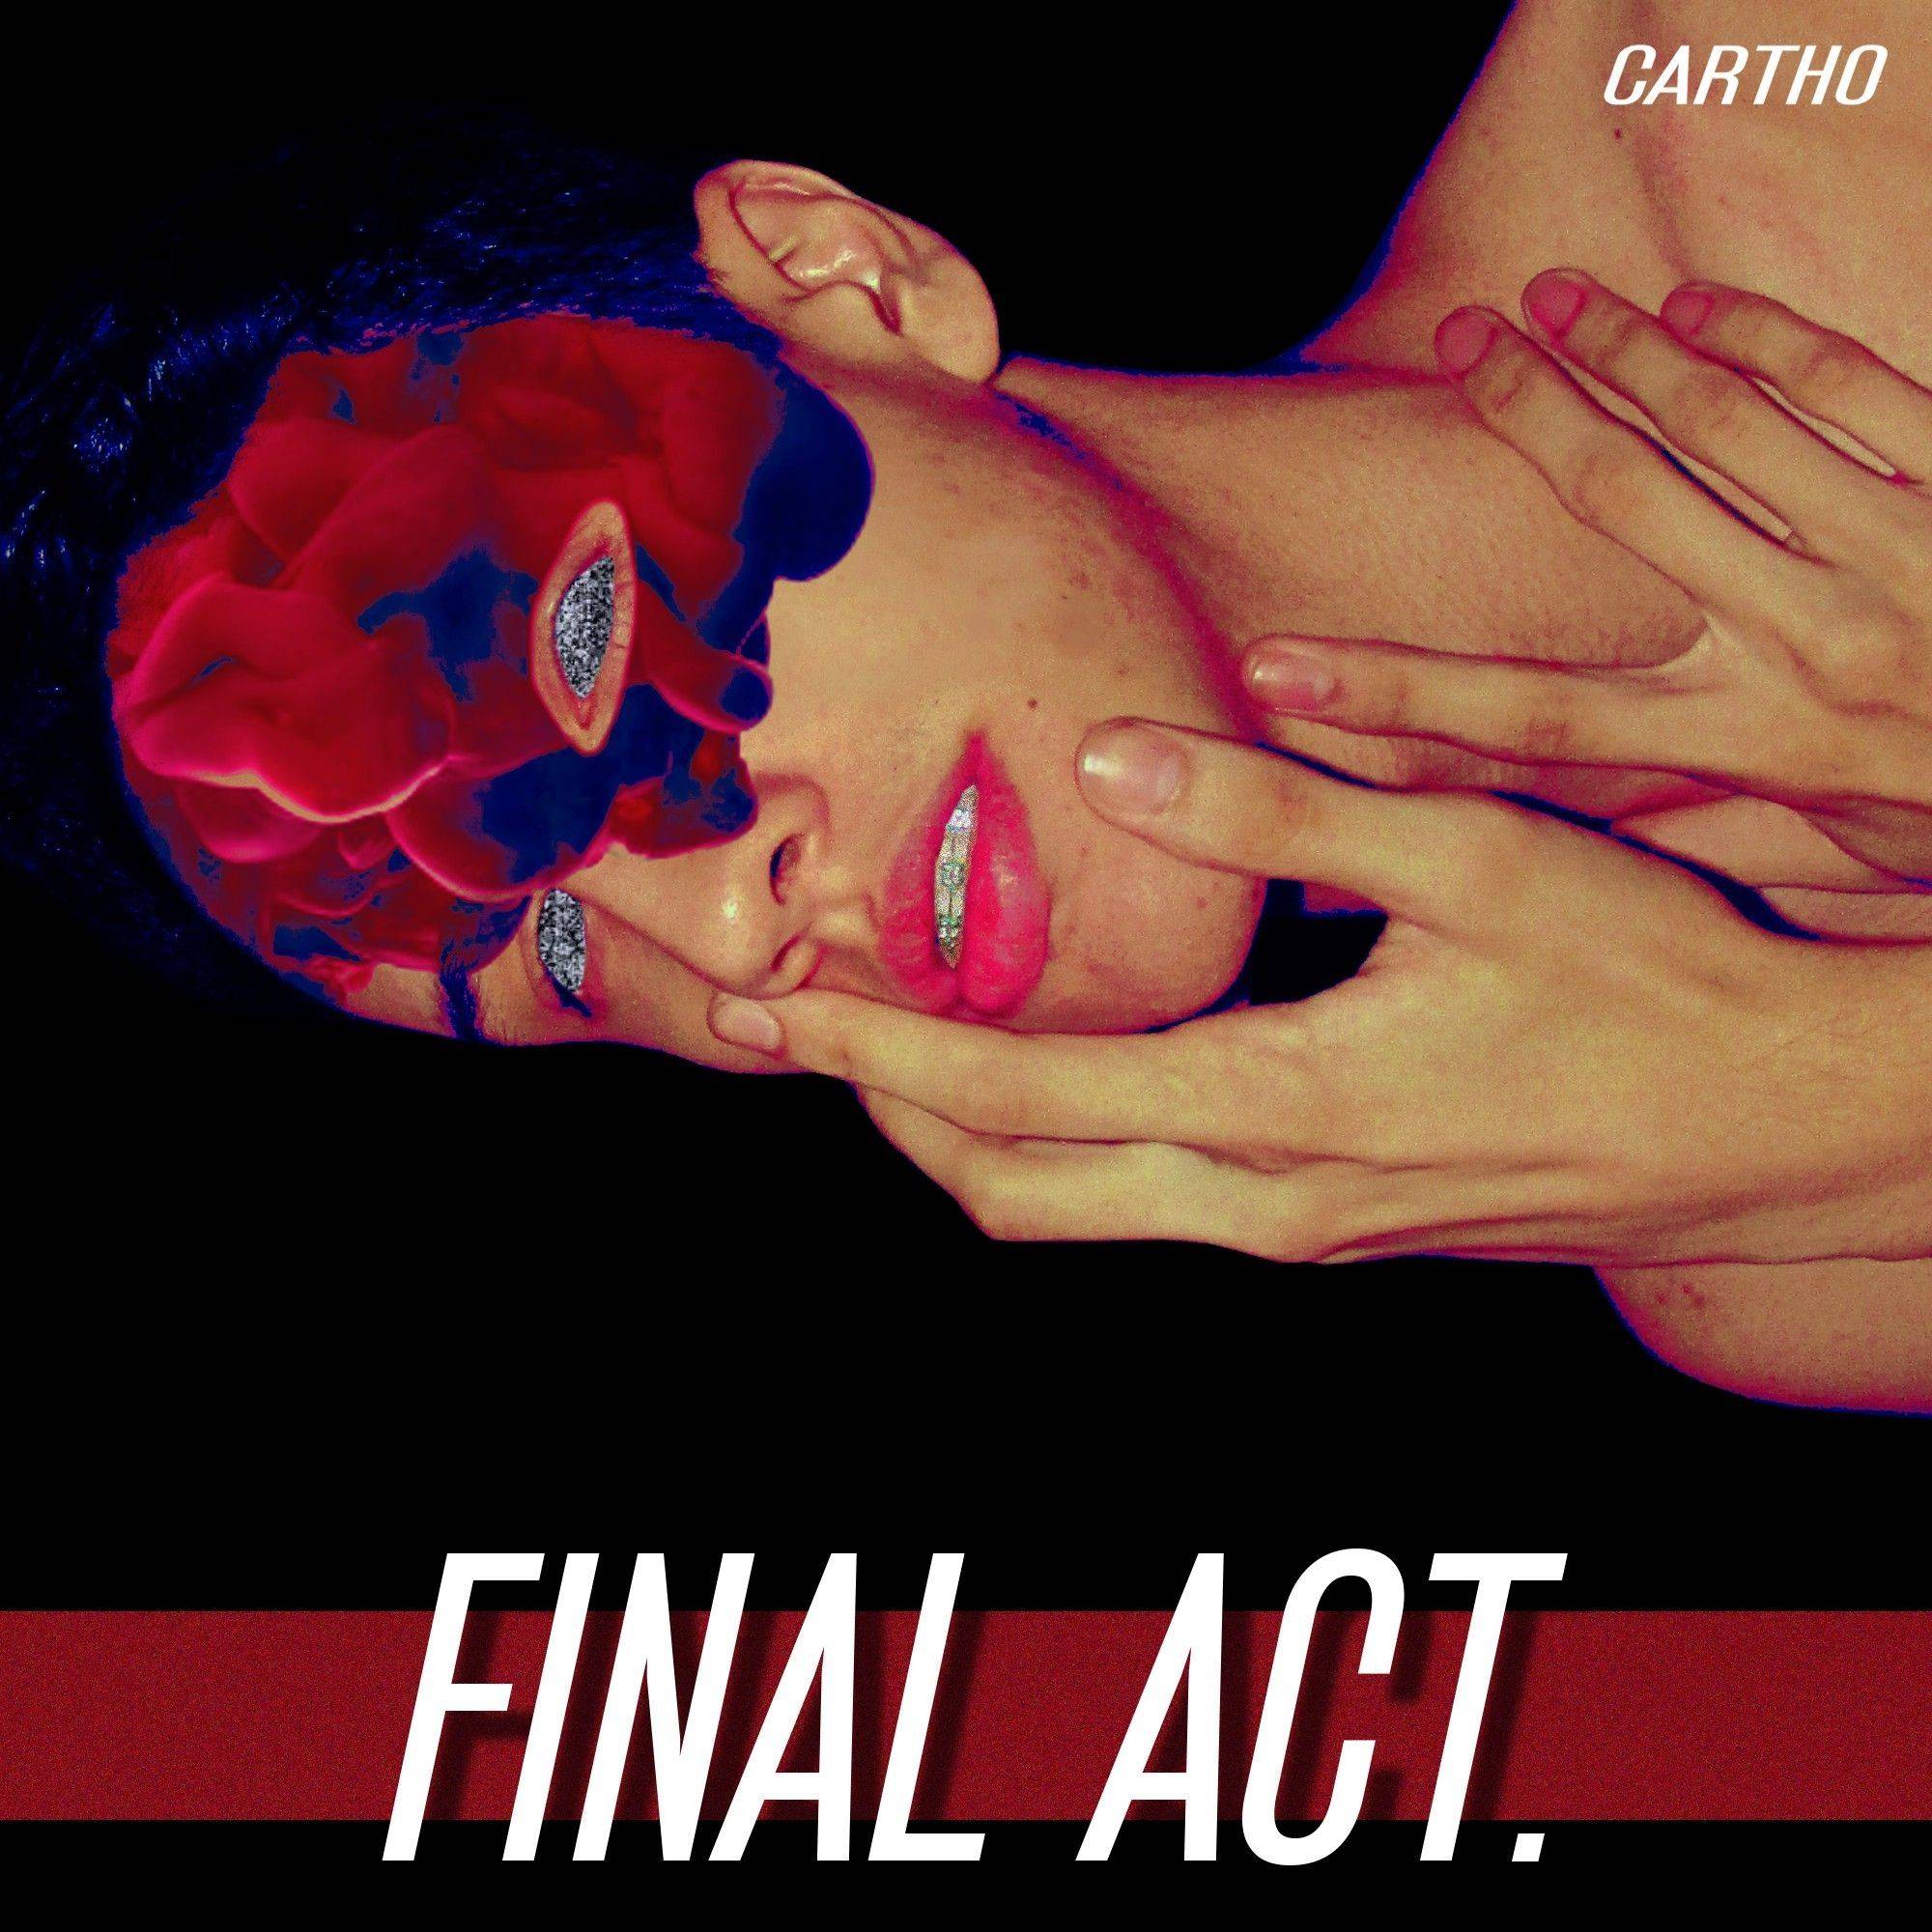 Final Act